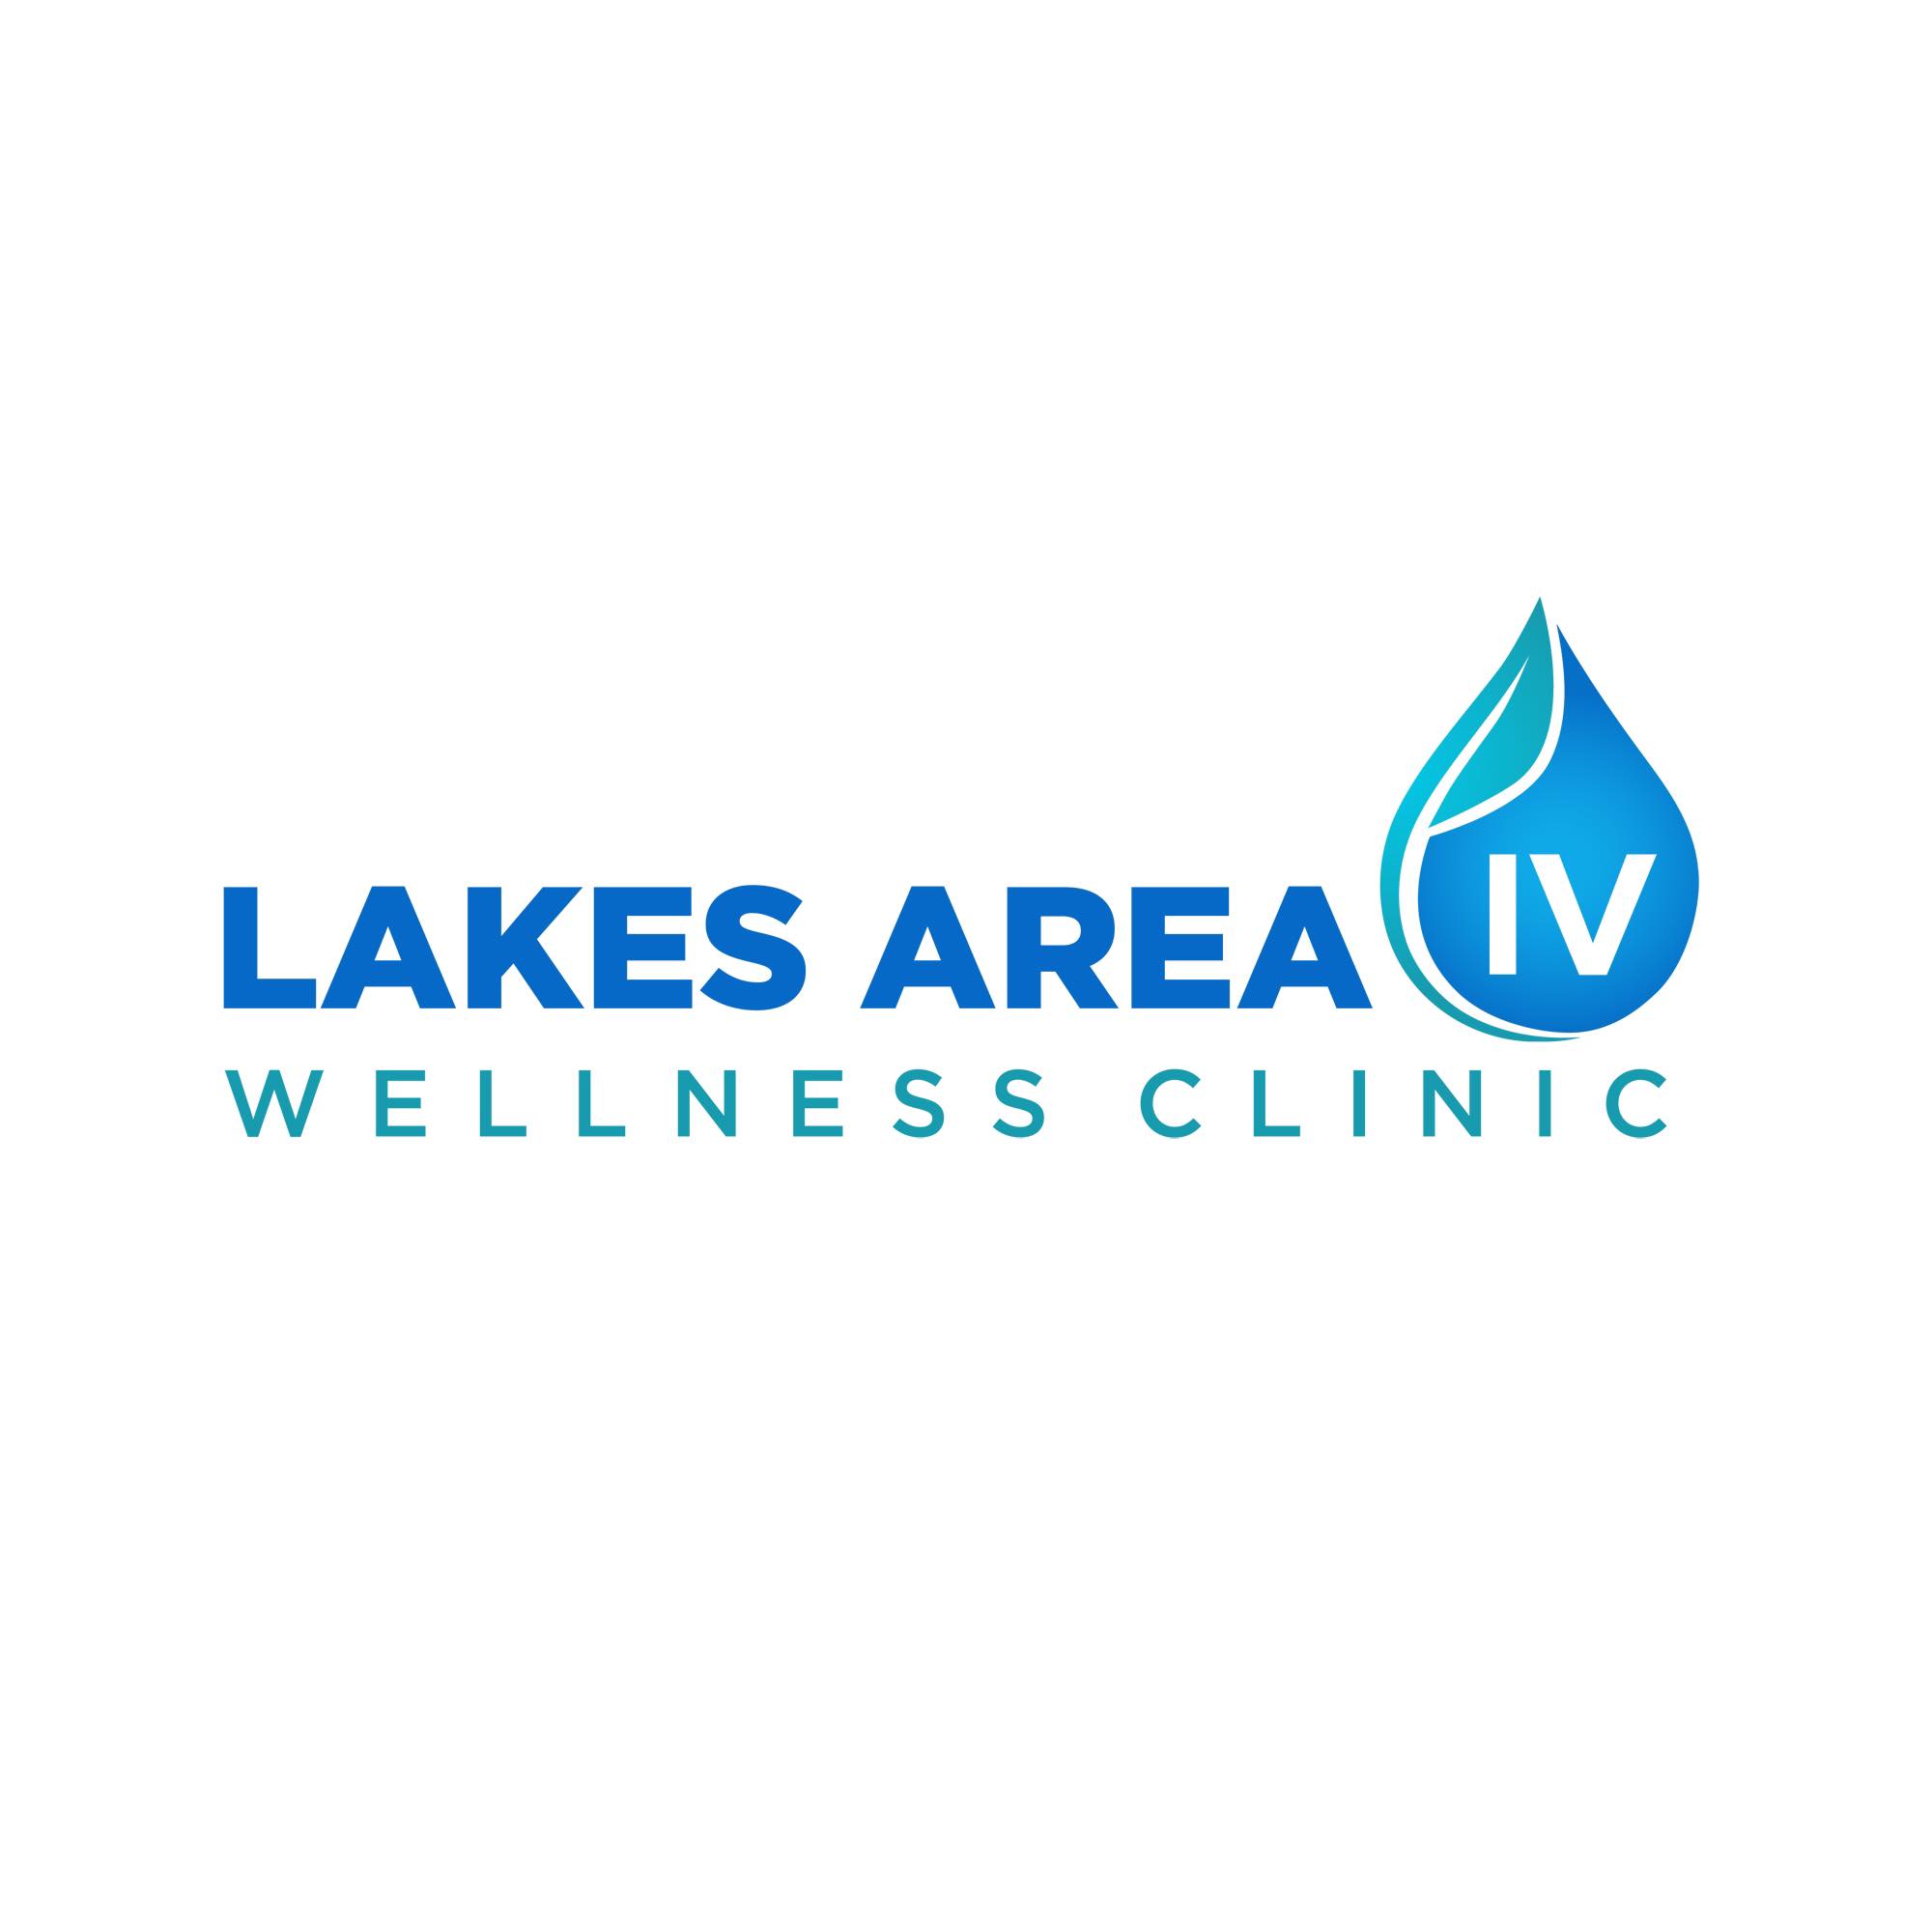 Lakes Area IV Wellness Clinic